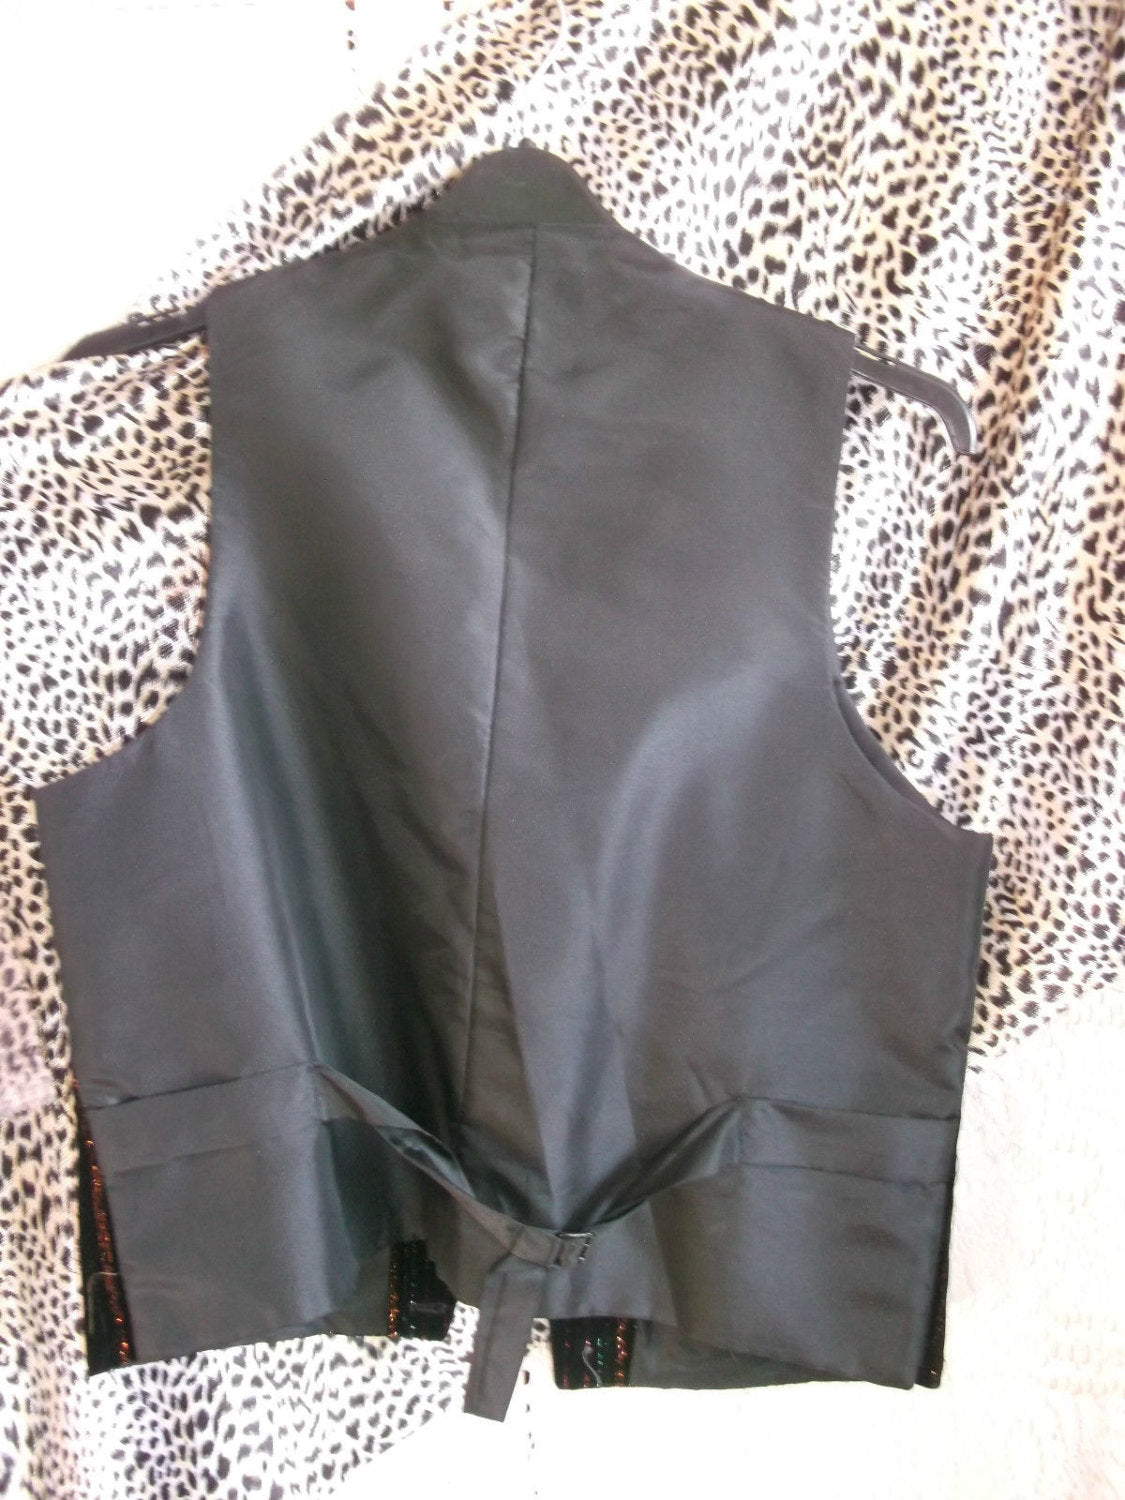 Unisex Funky waistcoat-2 designs available.size 46" chest/SIZE XL Wonkey Donkey Bazaar